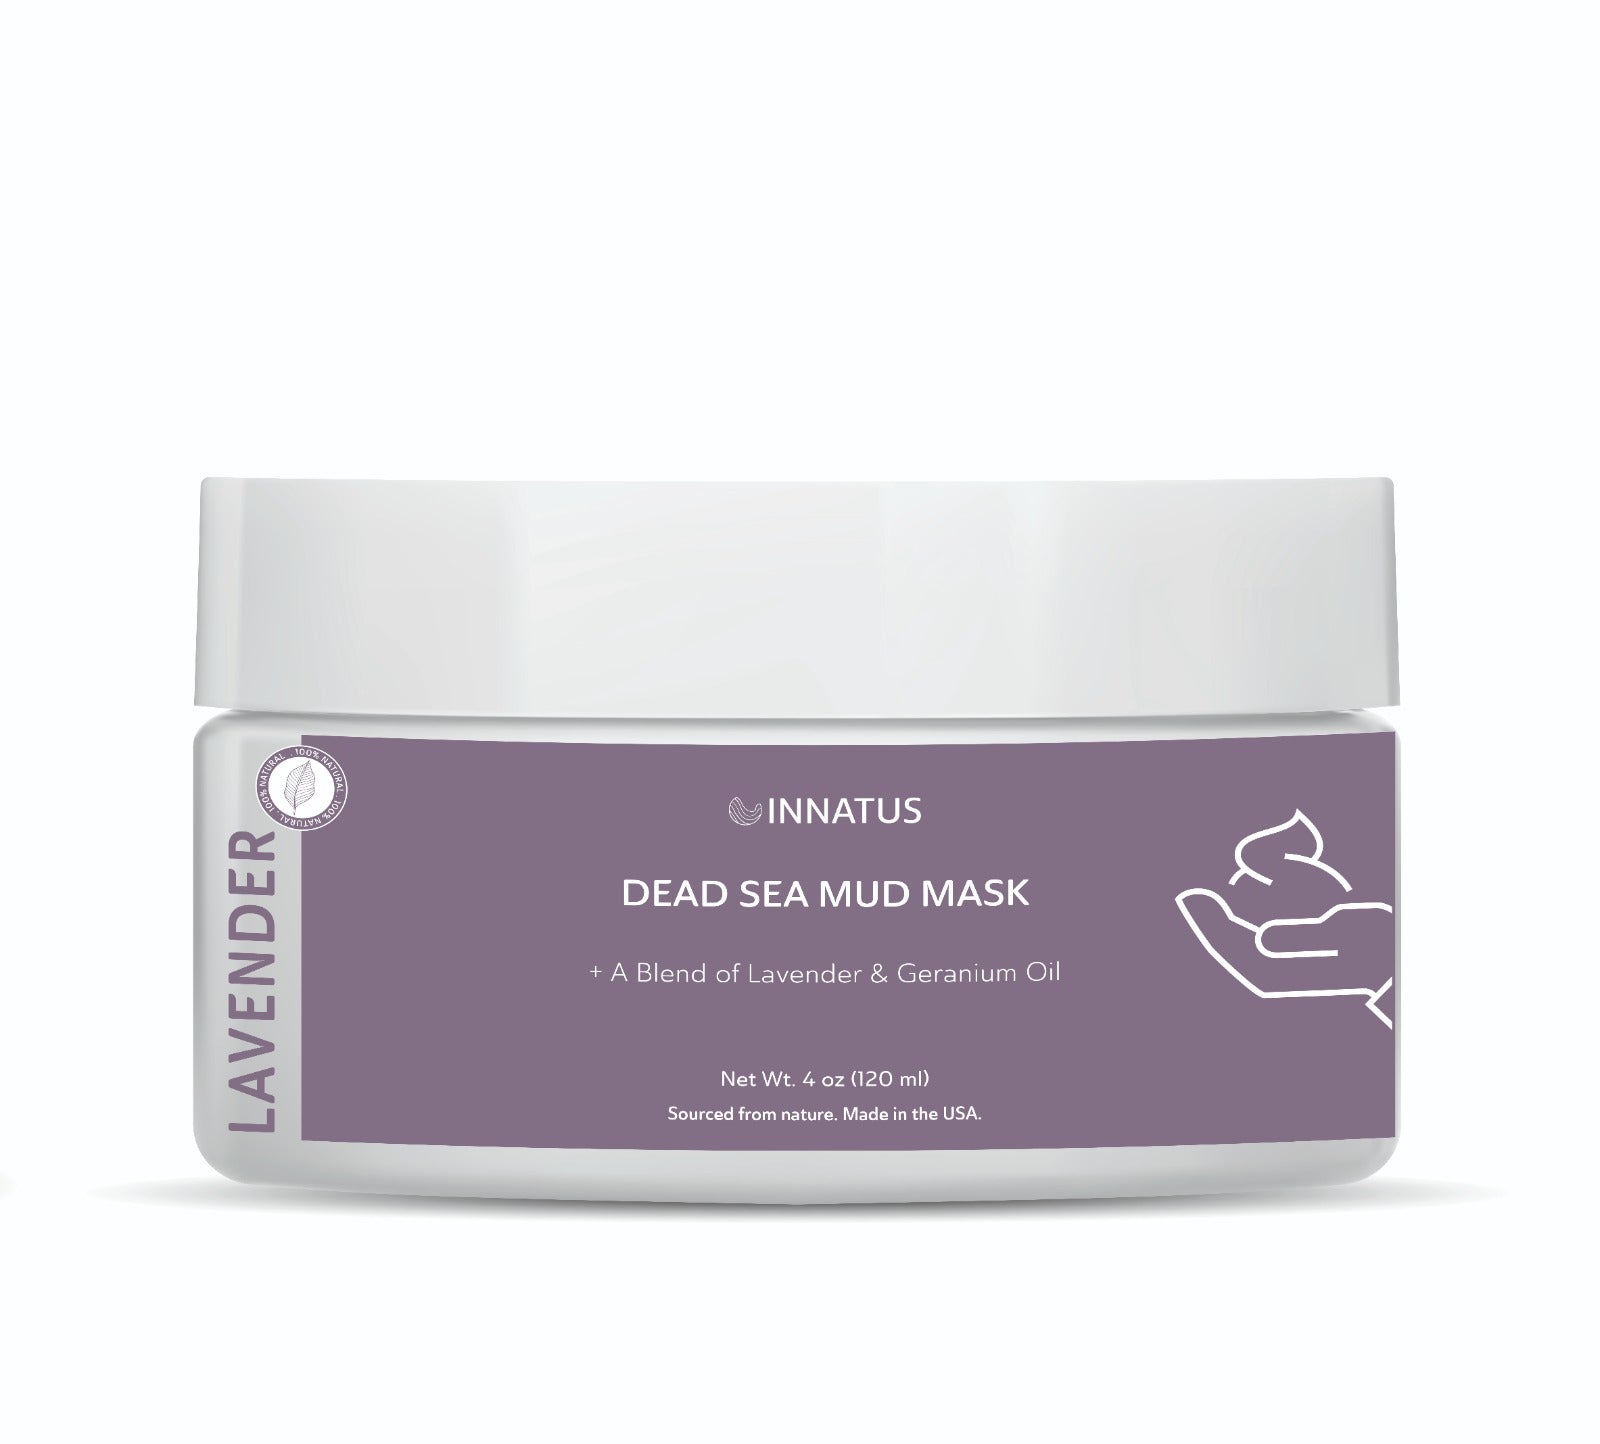 Dead Sea Mud Mask with Lavender Oil Blend